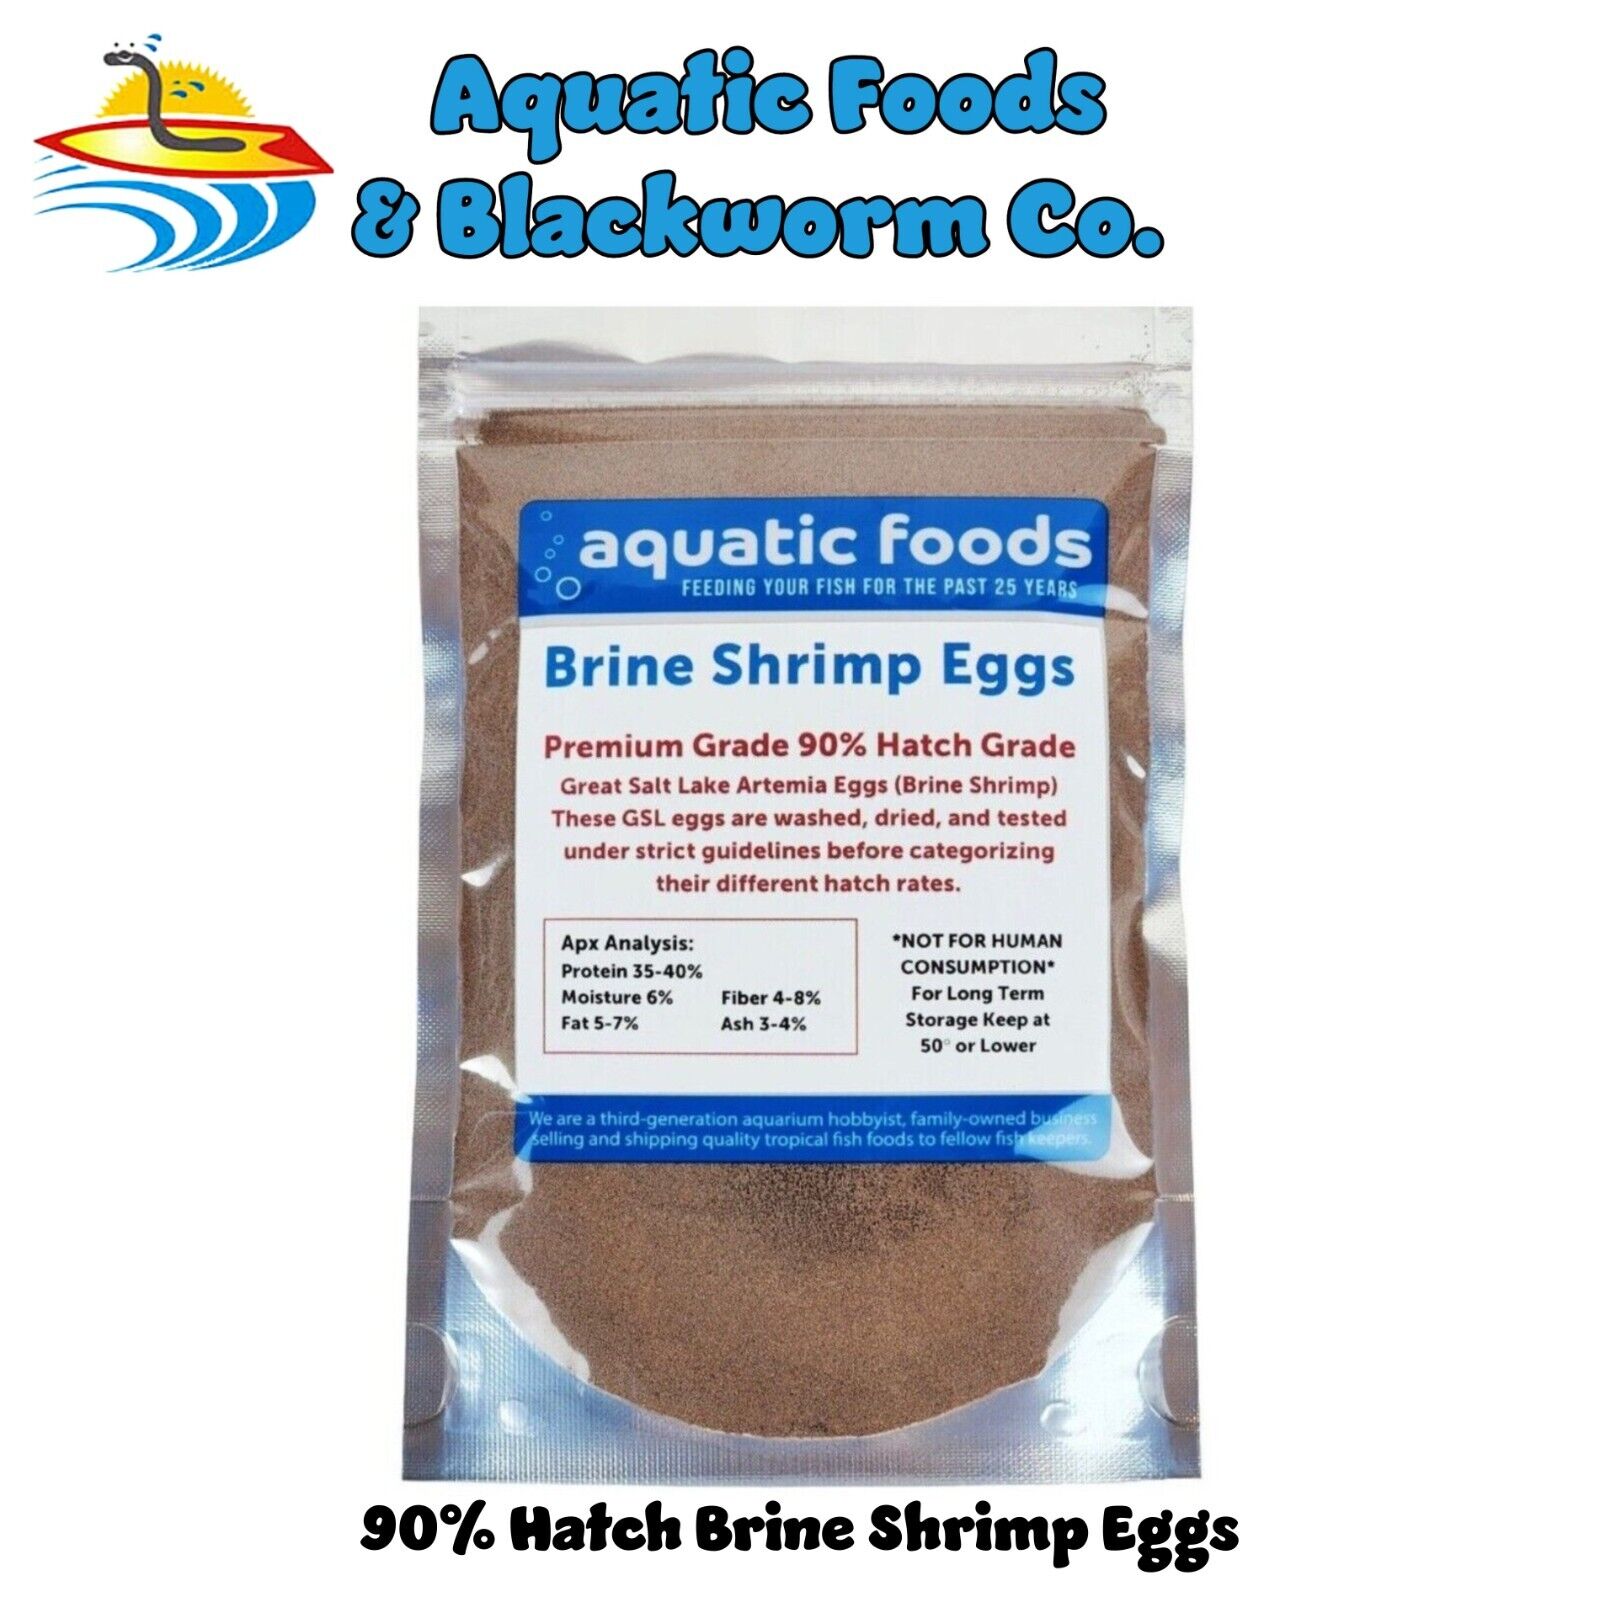 Brine Shrimp Eggs, Premium Grade 90% Hatch, Great Salt Lake (Artemia Cysts) Eggs